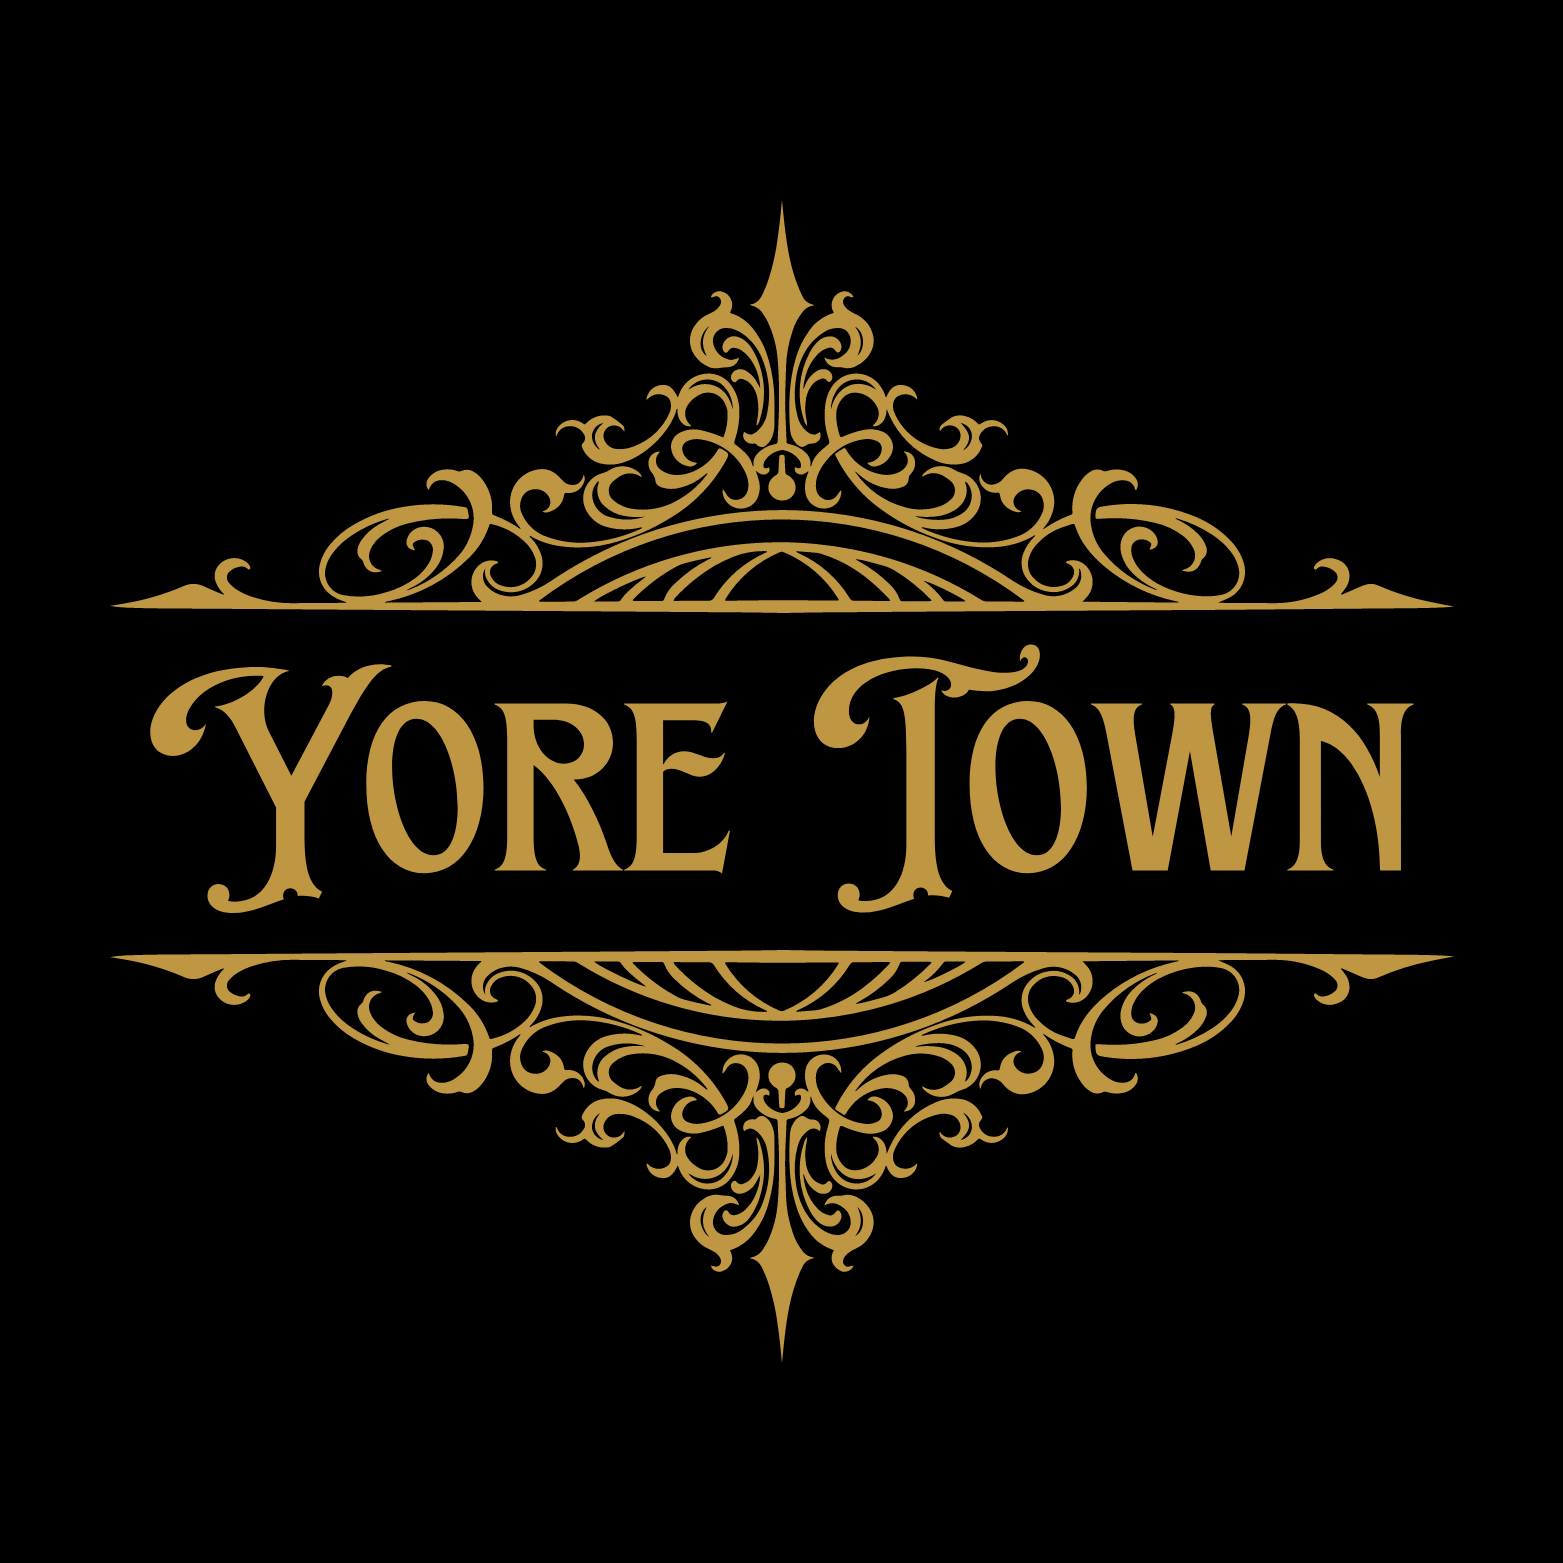 Yore town